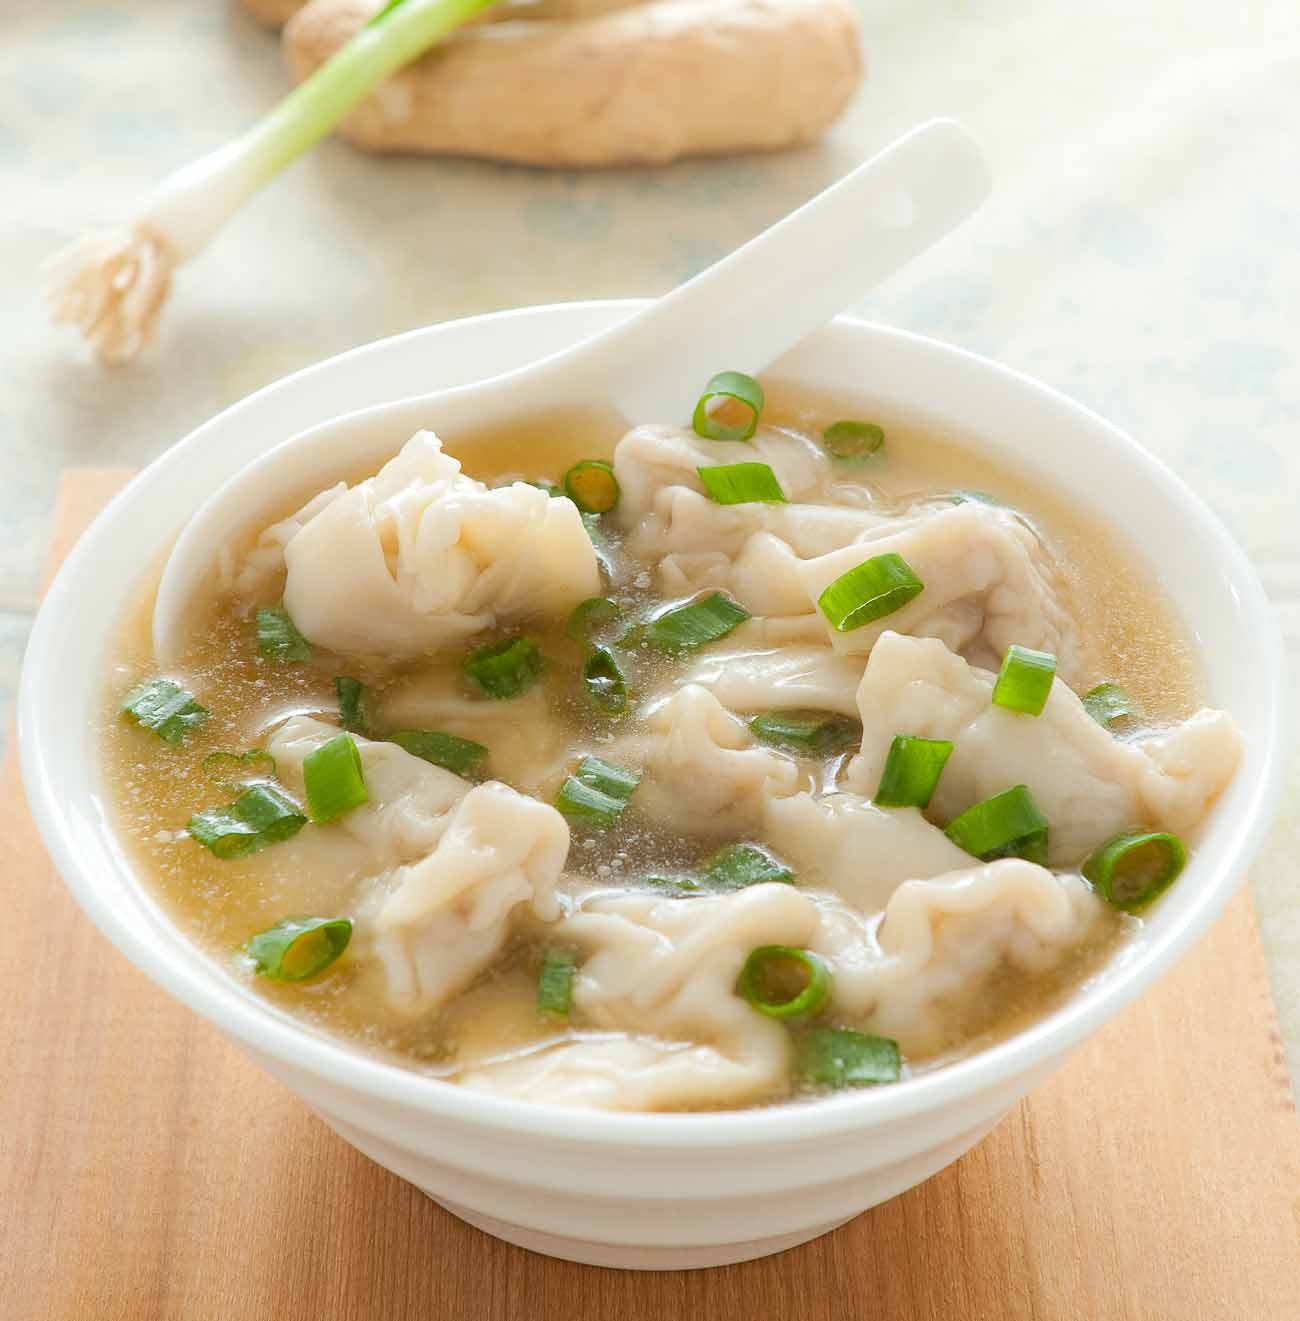 https://www.archanaskitchen.com/images/archanaskitchen/World_Soups/Vegetarian_Wonton_Soup_Indian_Chinese.jpg